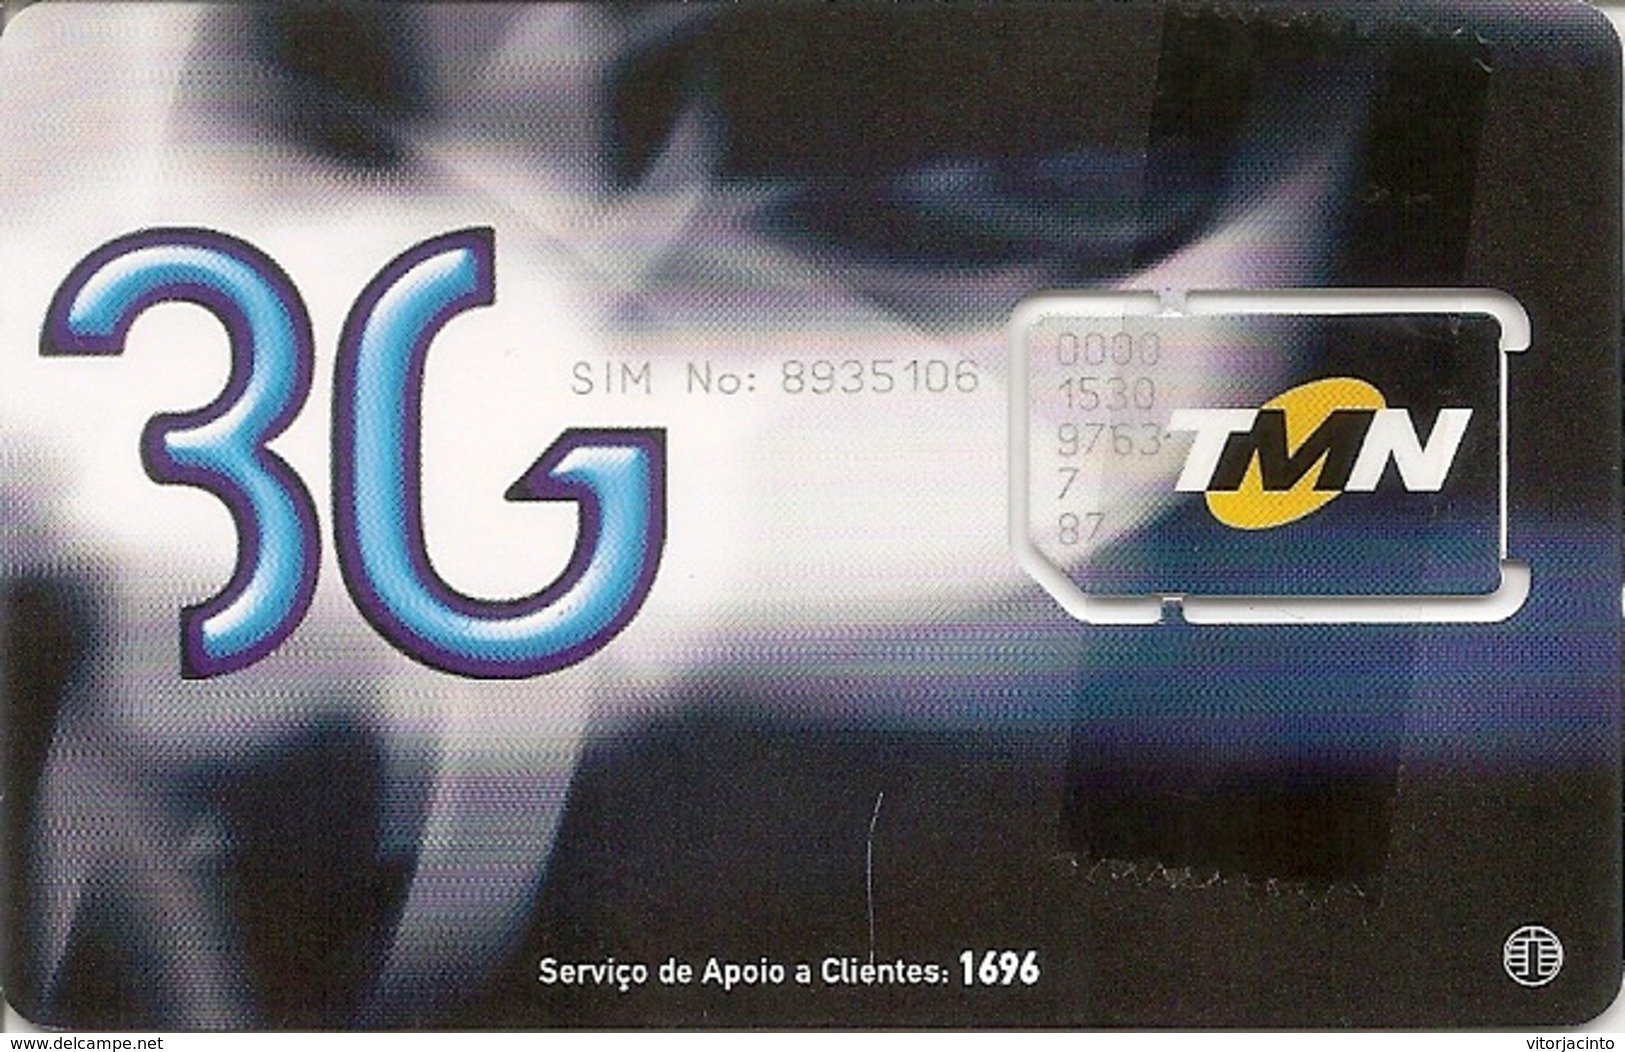 Mobile Phonecard - TMN 3G - Portugal - Portugal